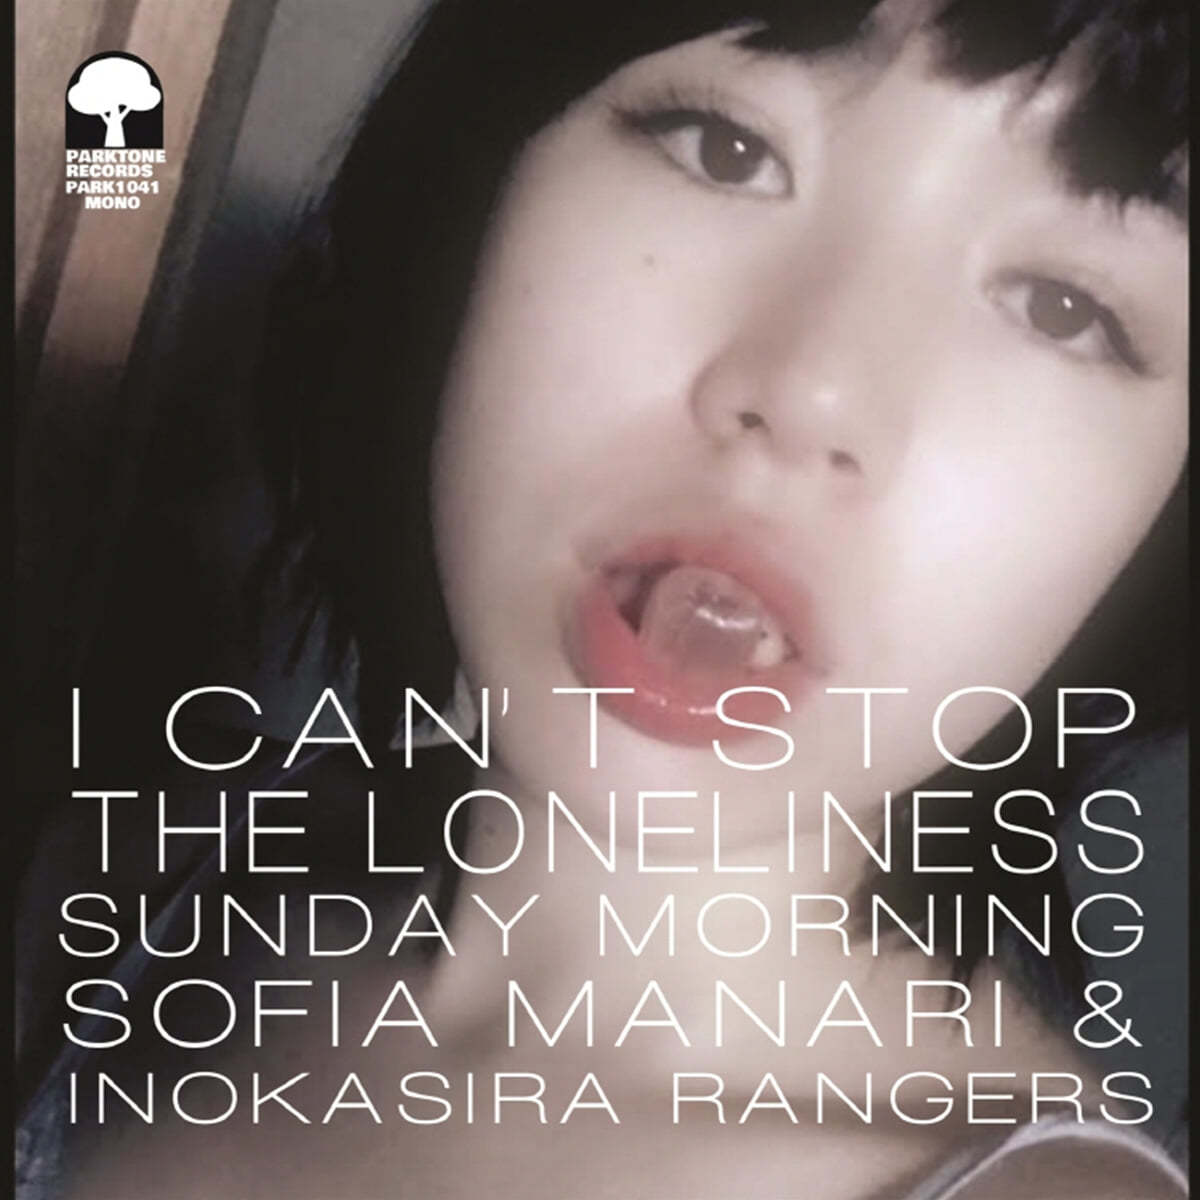 Sofia Manari / Inokasira Rangers (소피아 마나리 / 이노카시라 레인저스) - I Can't Stop The Loneliness (슬픔이 멈추질 않아) / Sunday Morning [7인치 Vinyl] 